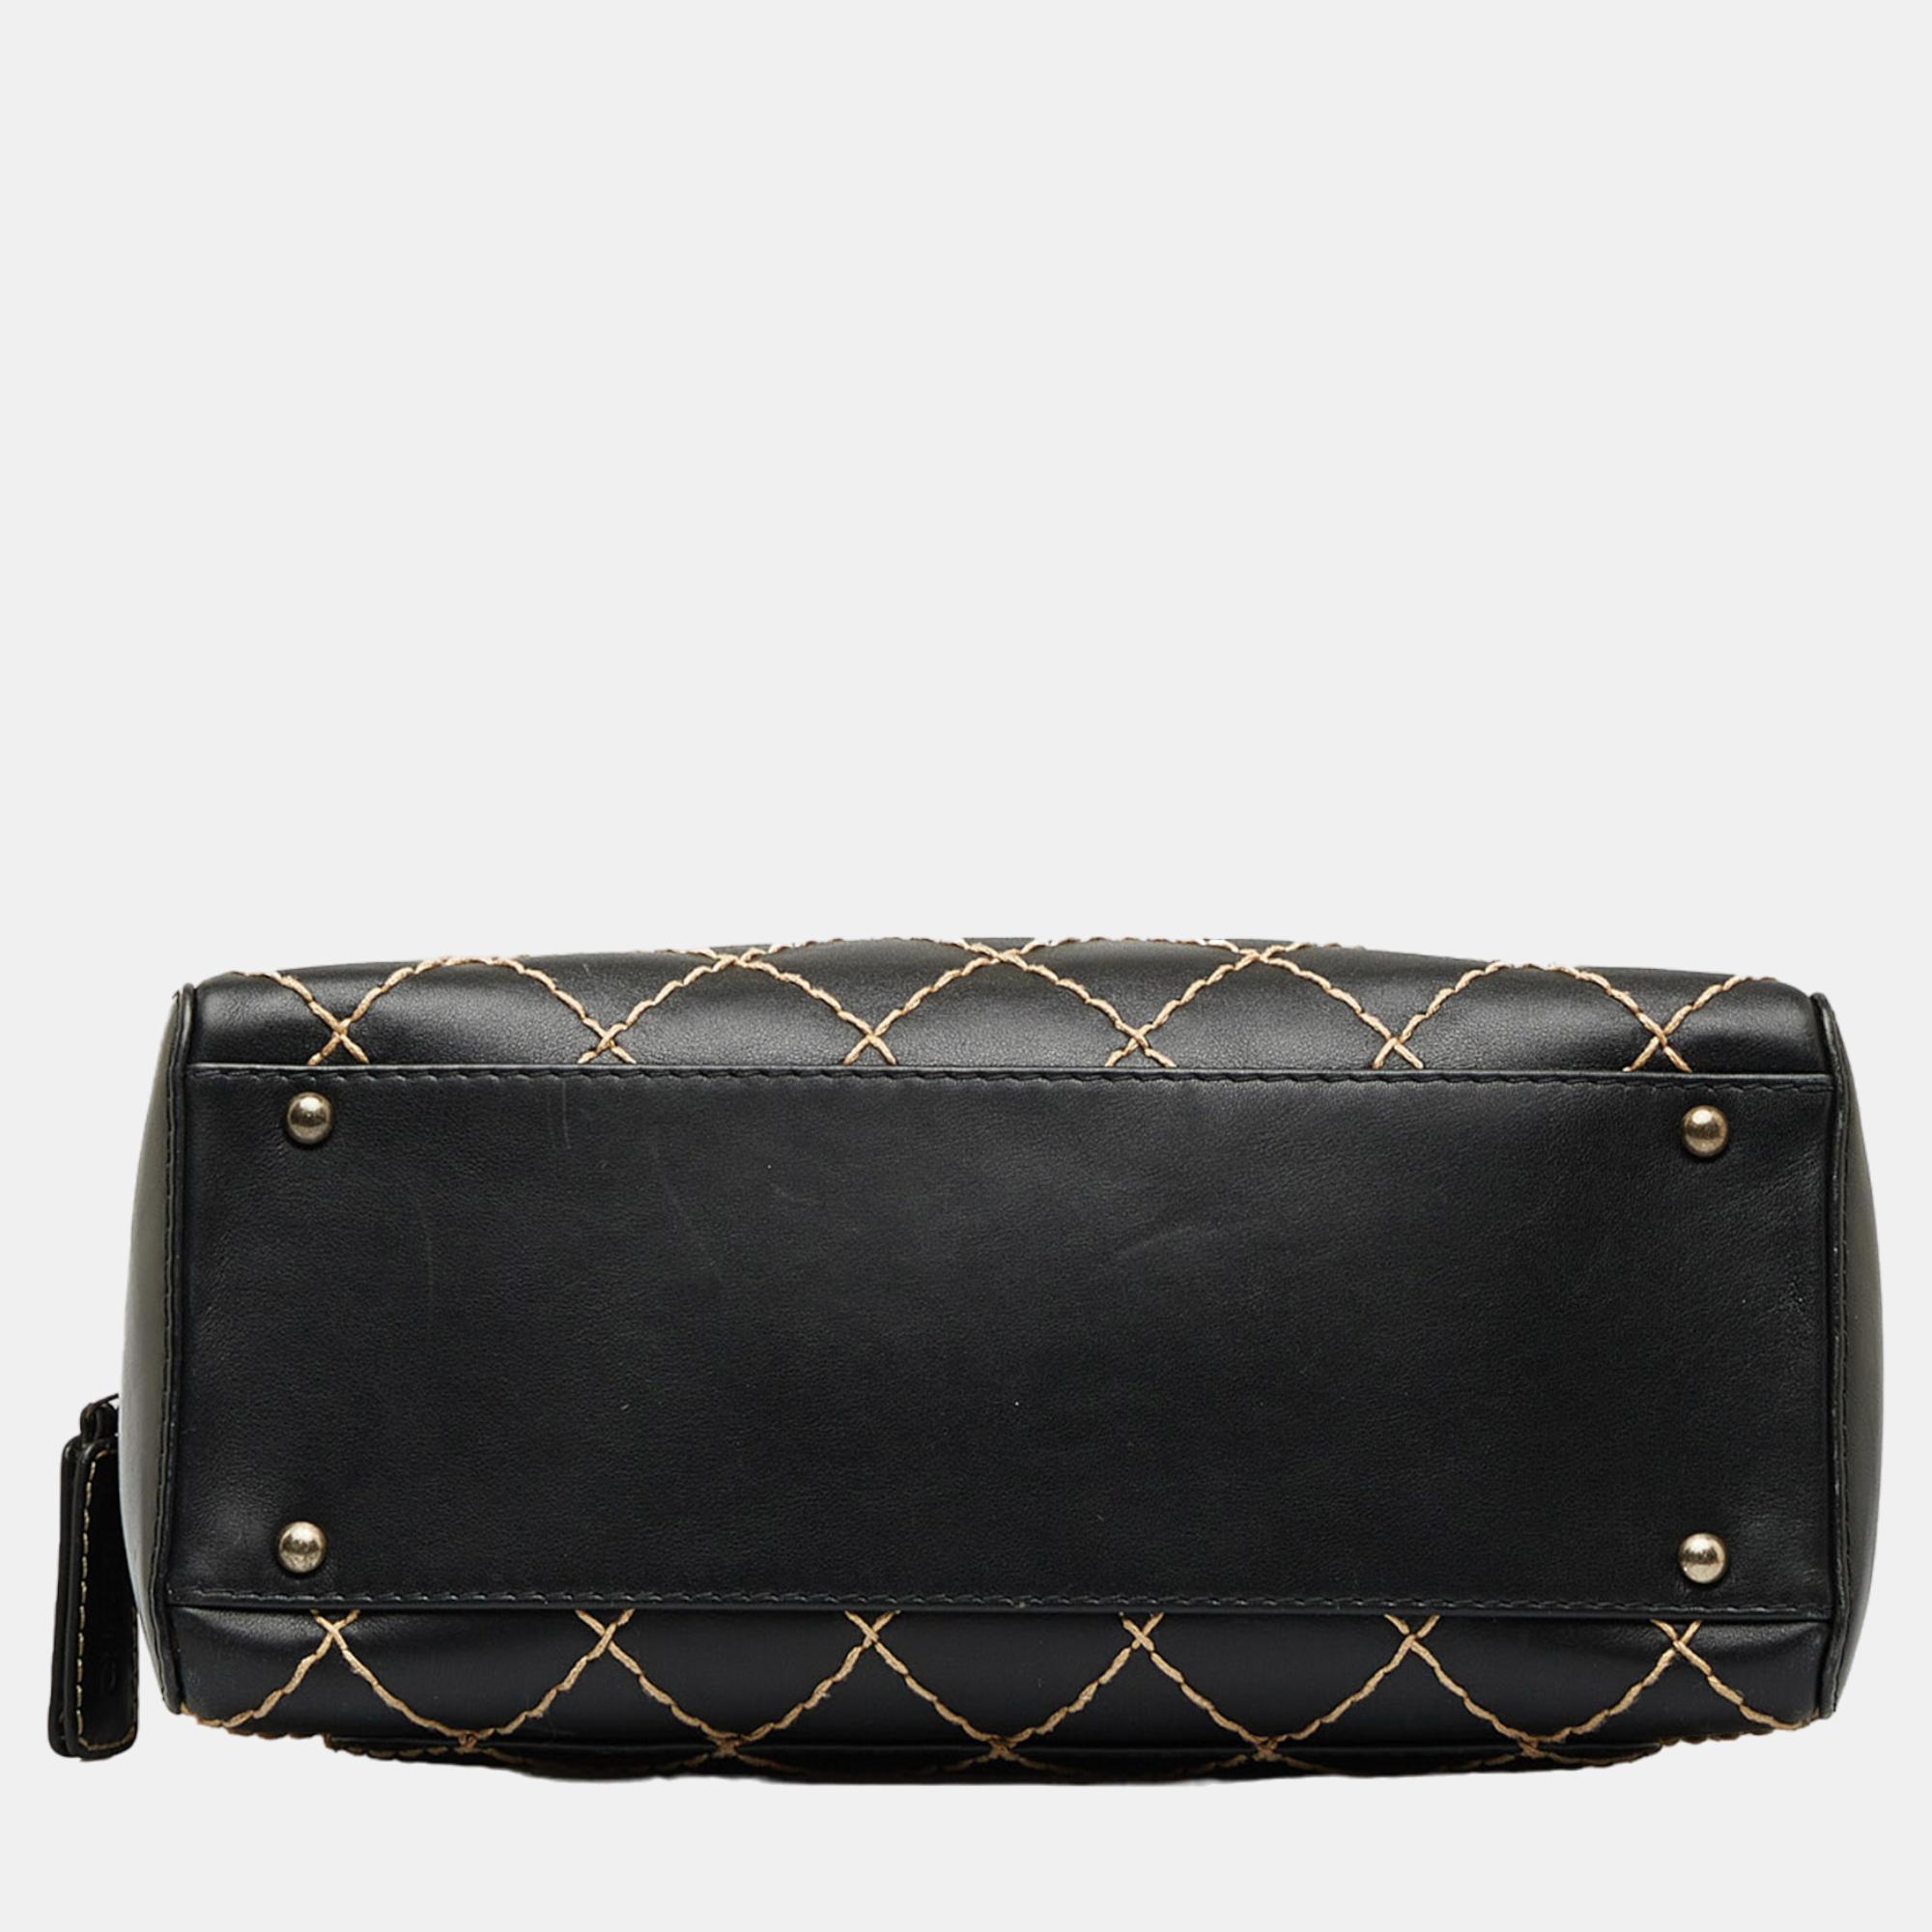 Chanel Black CC Wild Stitch Handbag